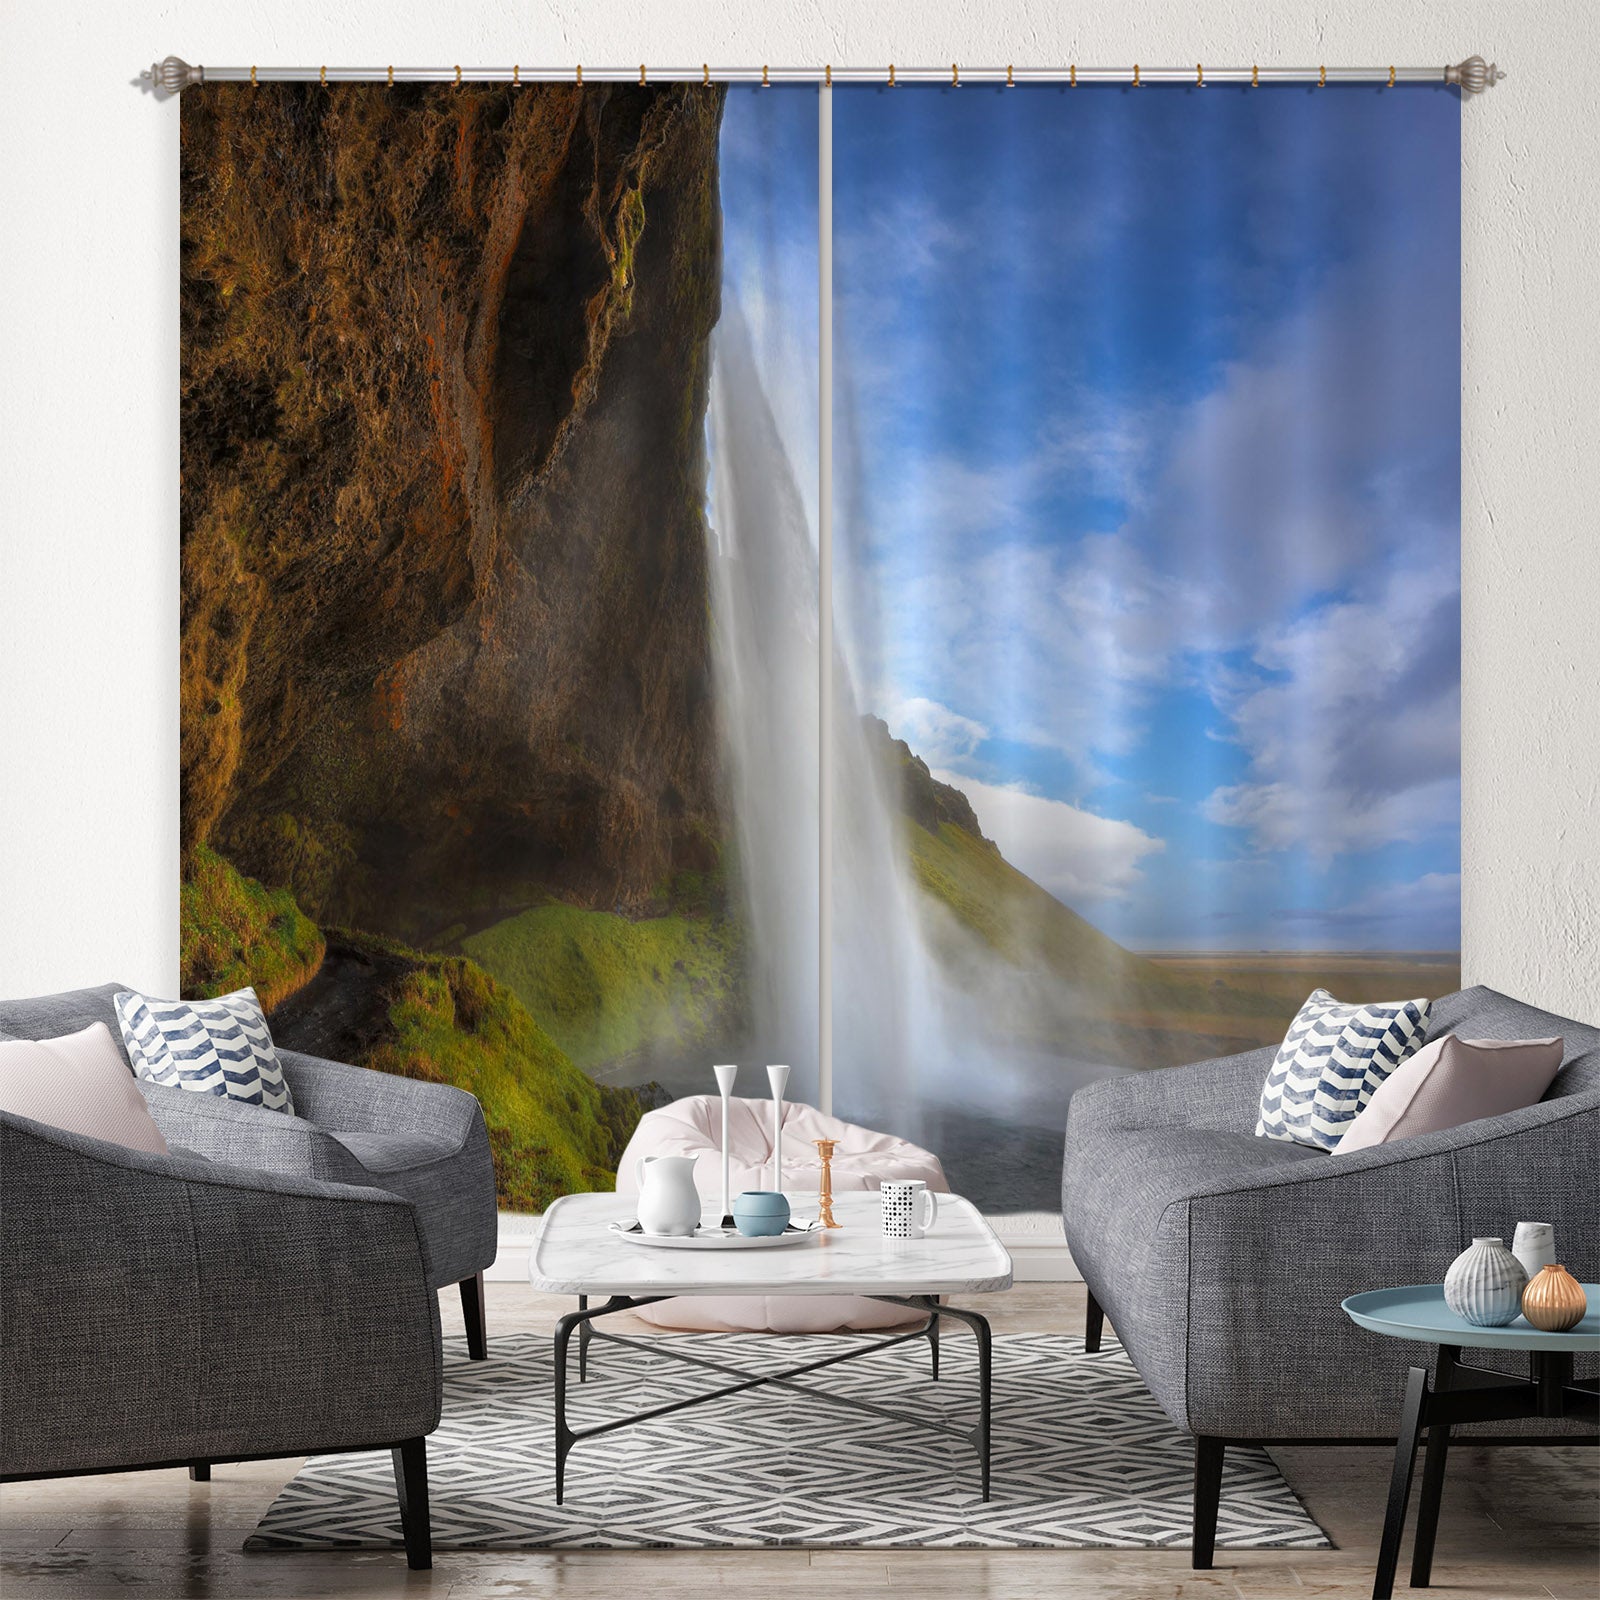 3D Kaki Falls 121 Marco Carmassi Curtain Curtains Drapes